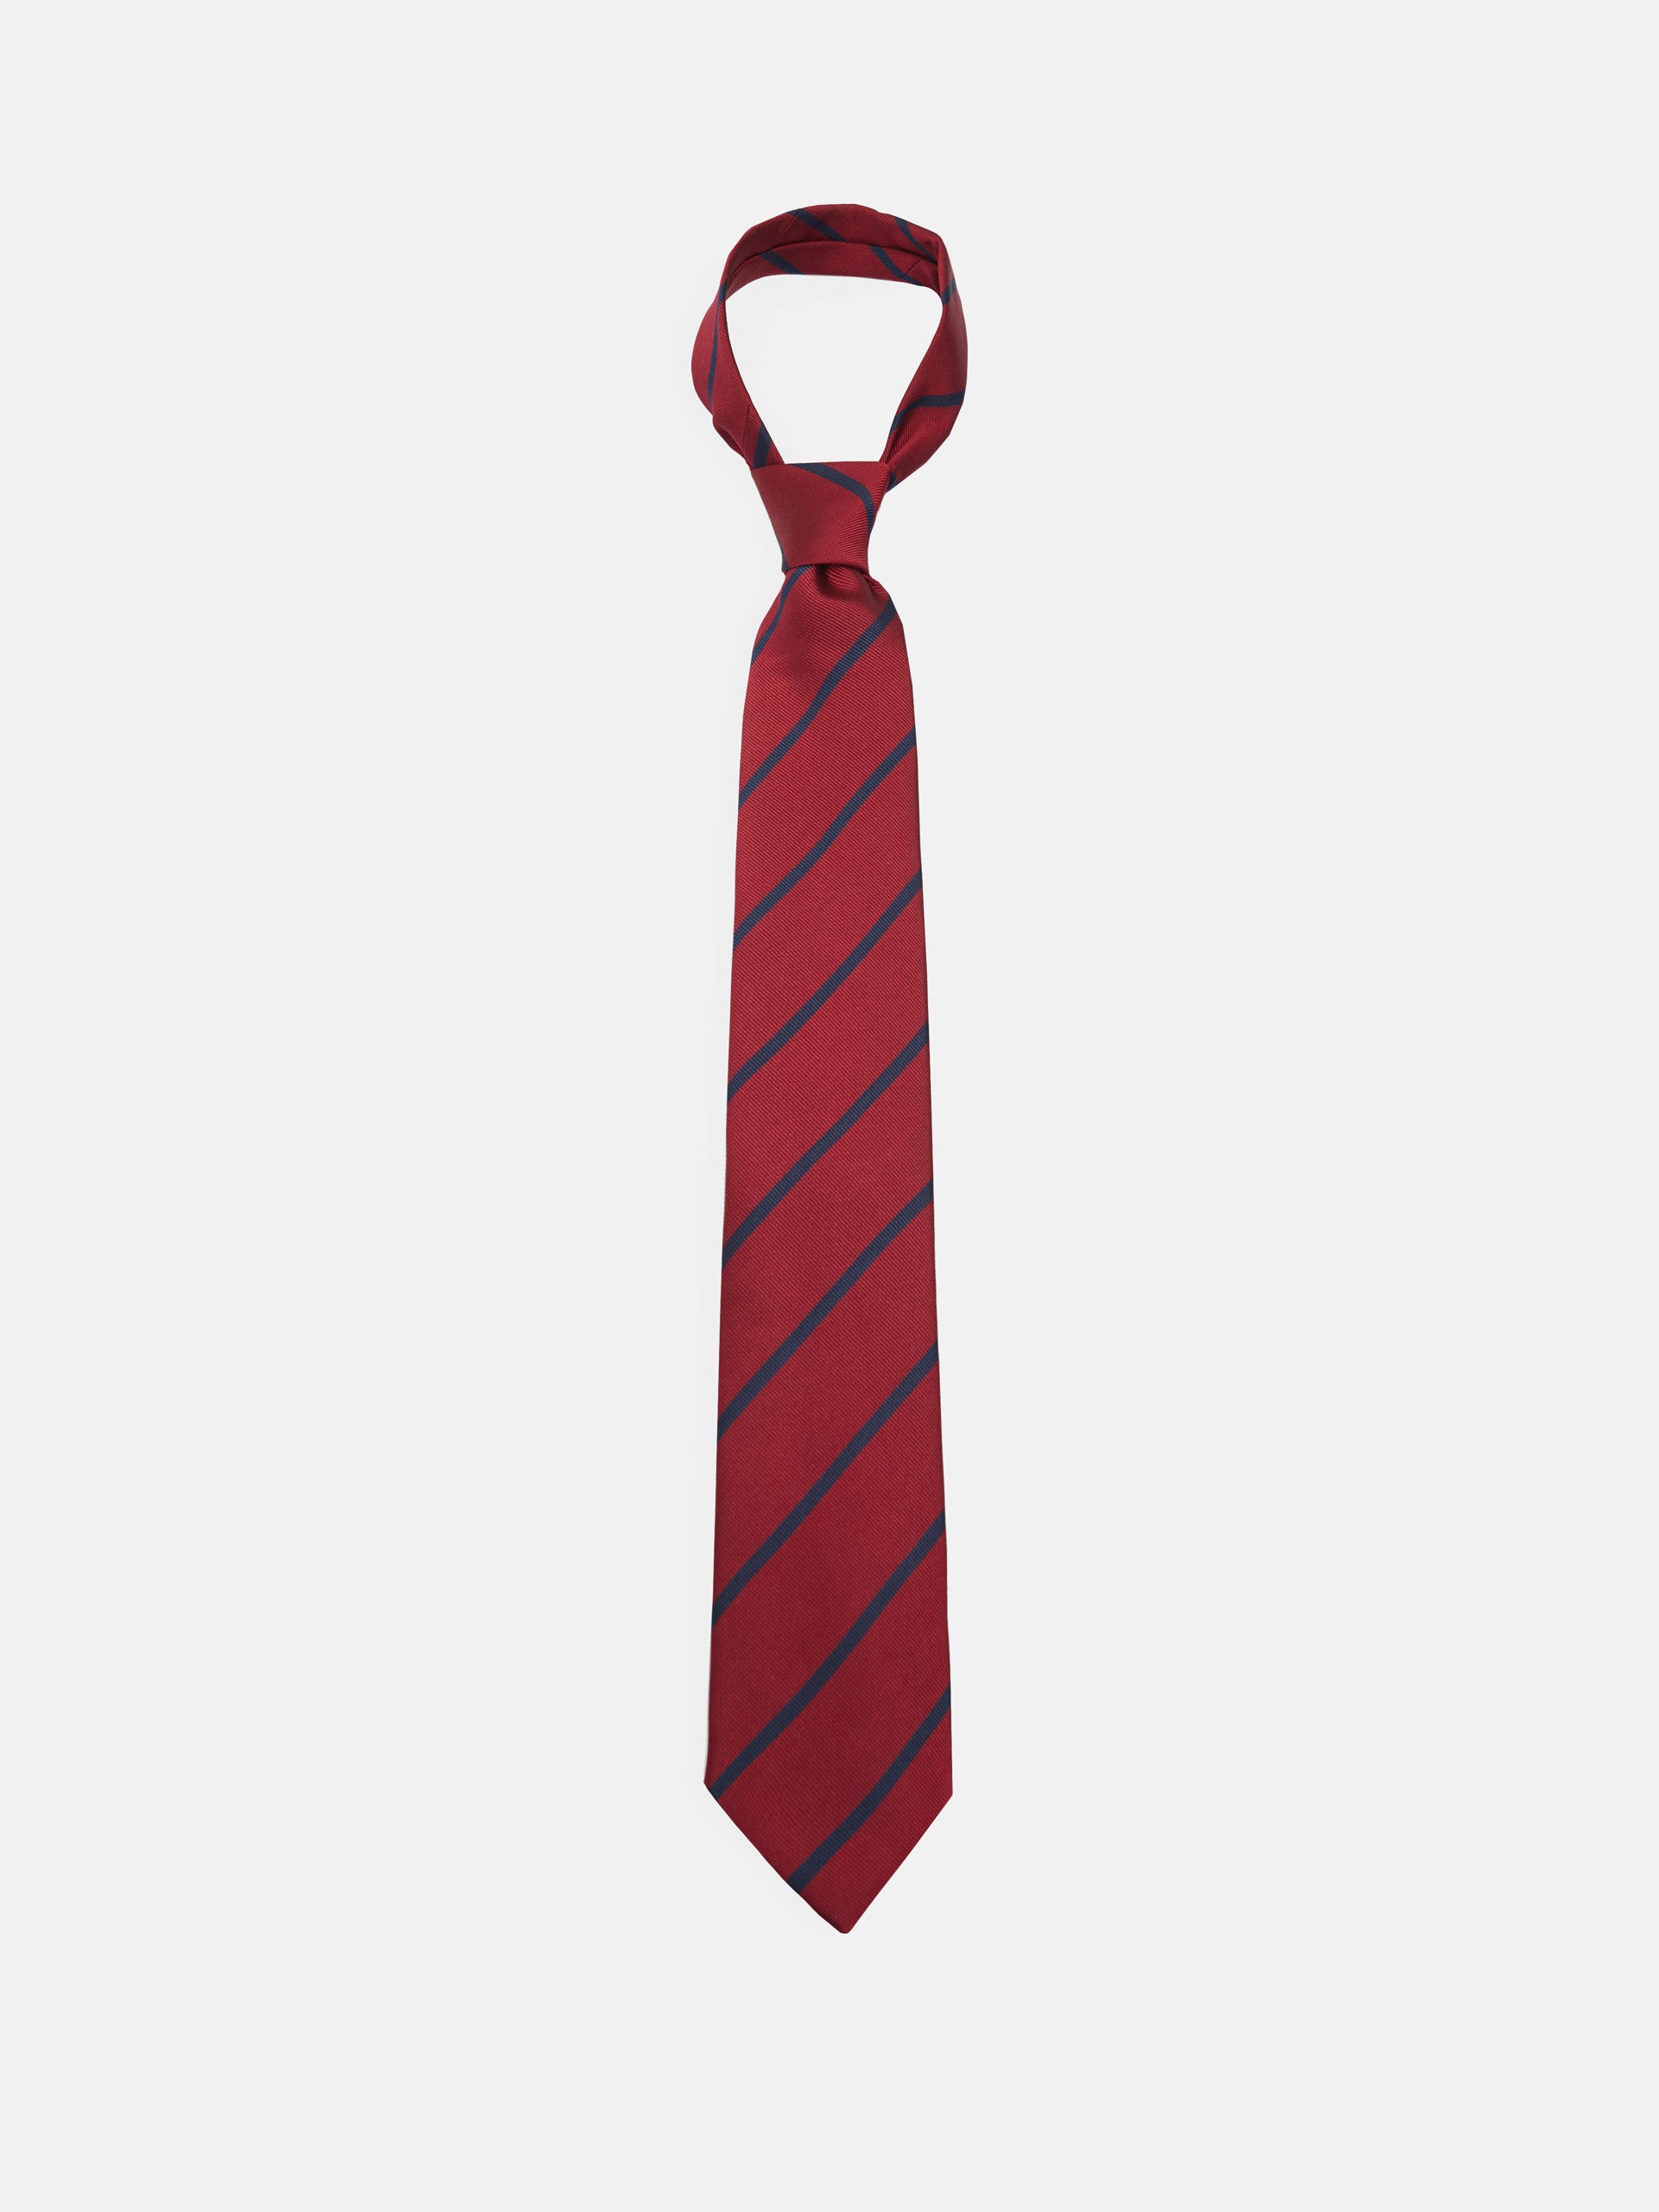 Burgundy striped tie